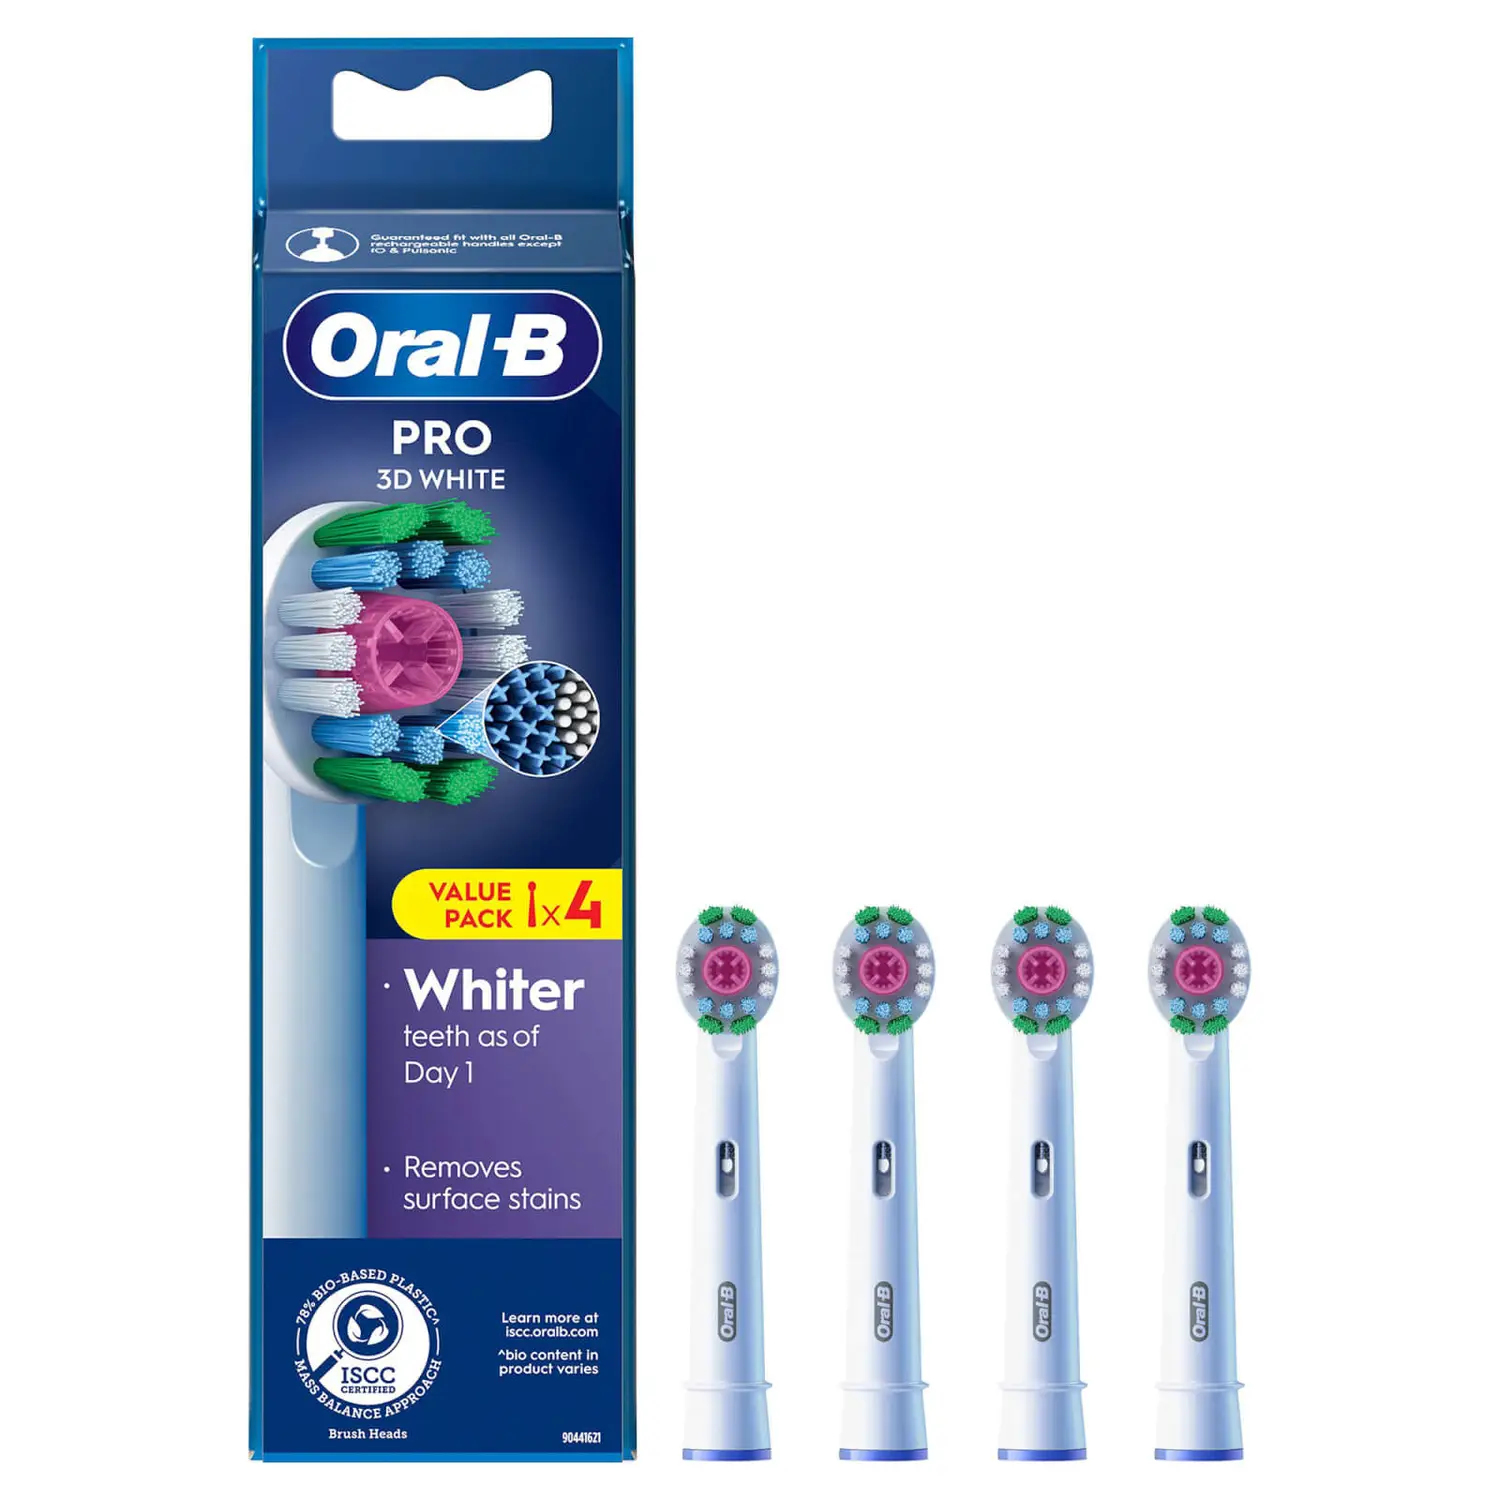 Oral-B 3D White